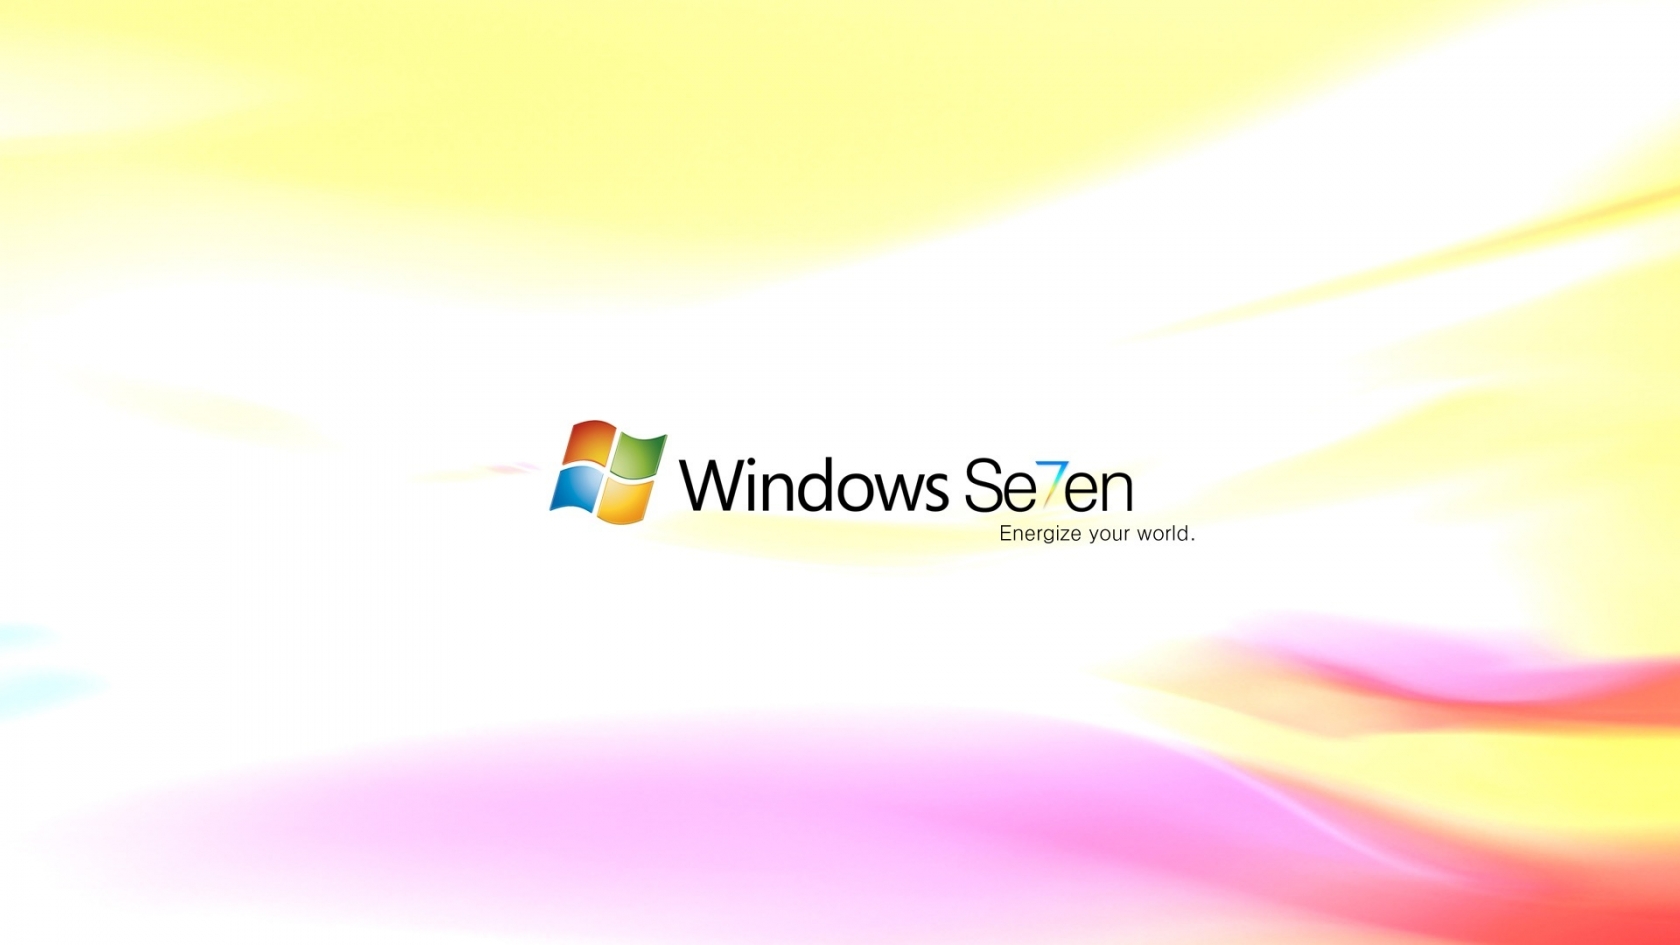 Windows 7 for 1680 x 945 HDTV resolution